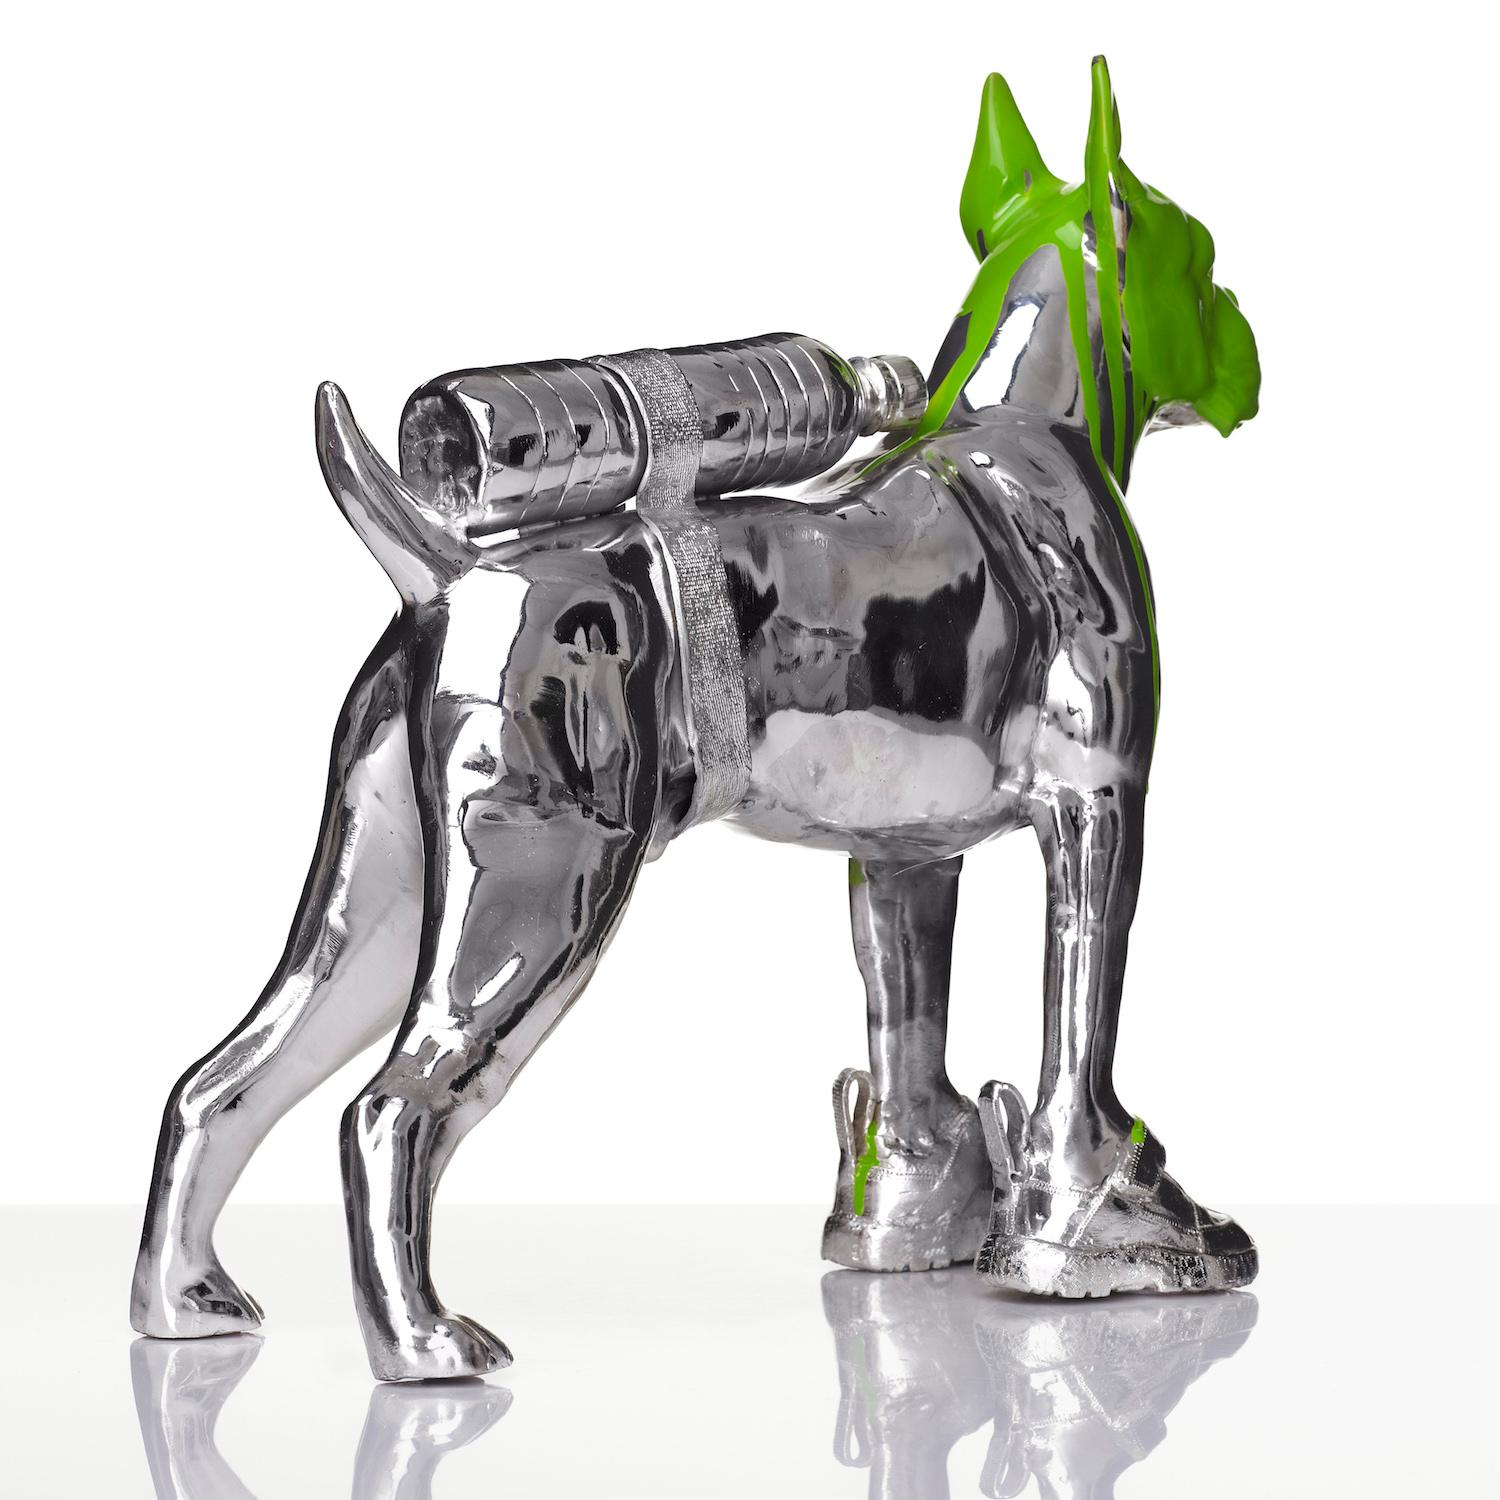 Cloned Bulldog with pet bottle - Pop Art Sculpture by William Sweetlove